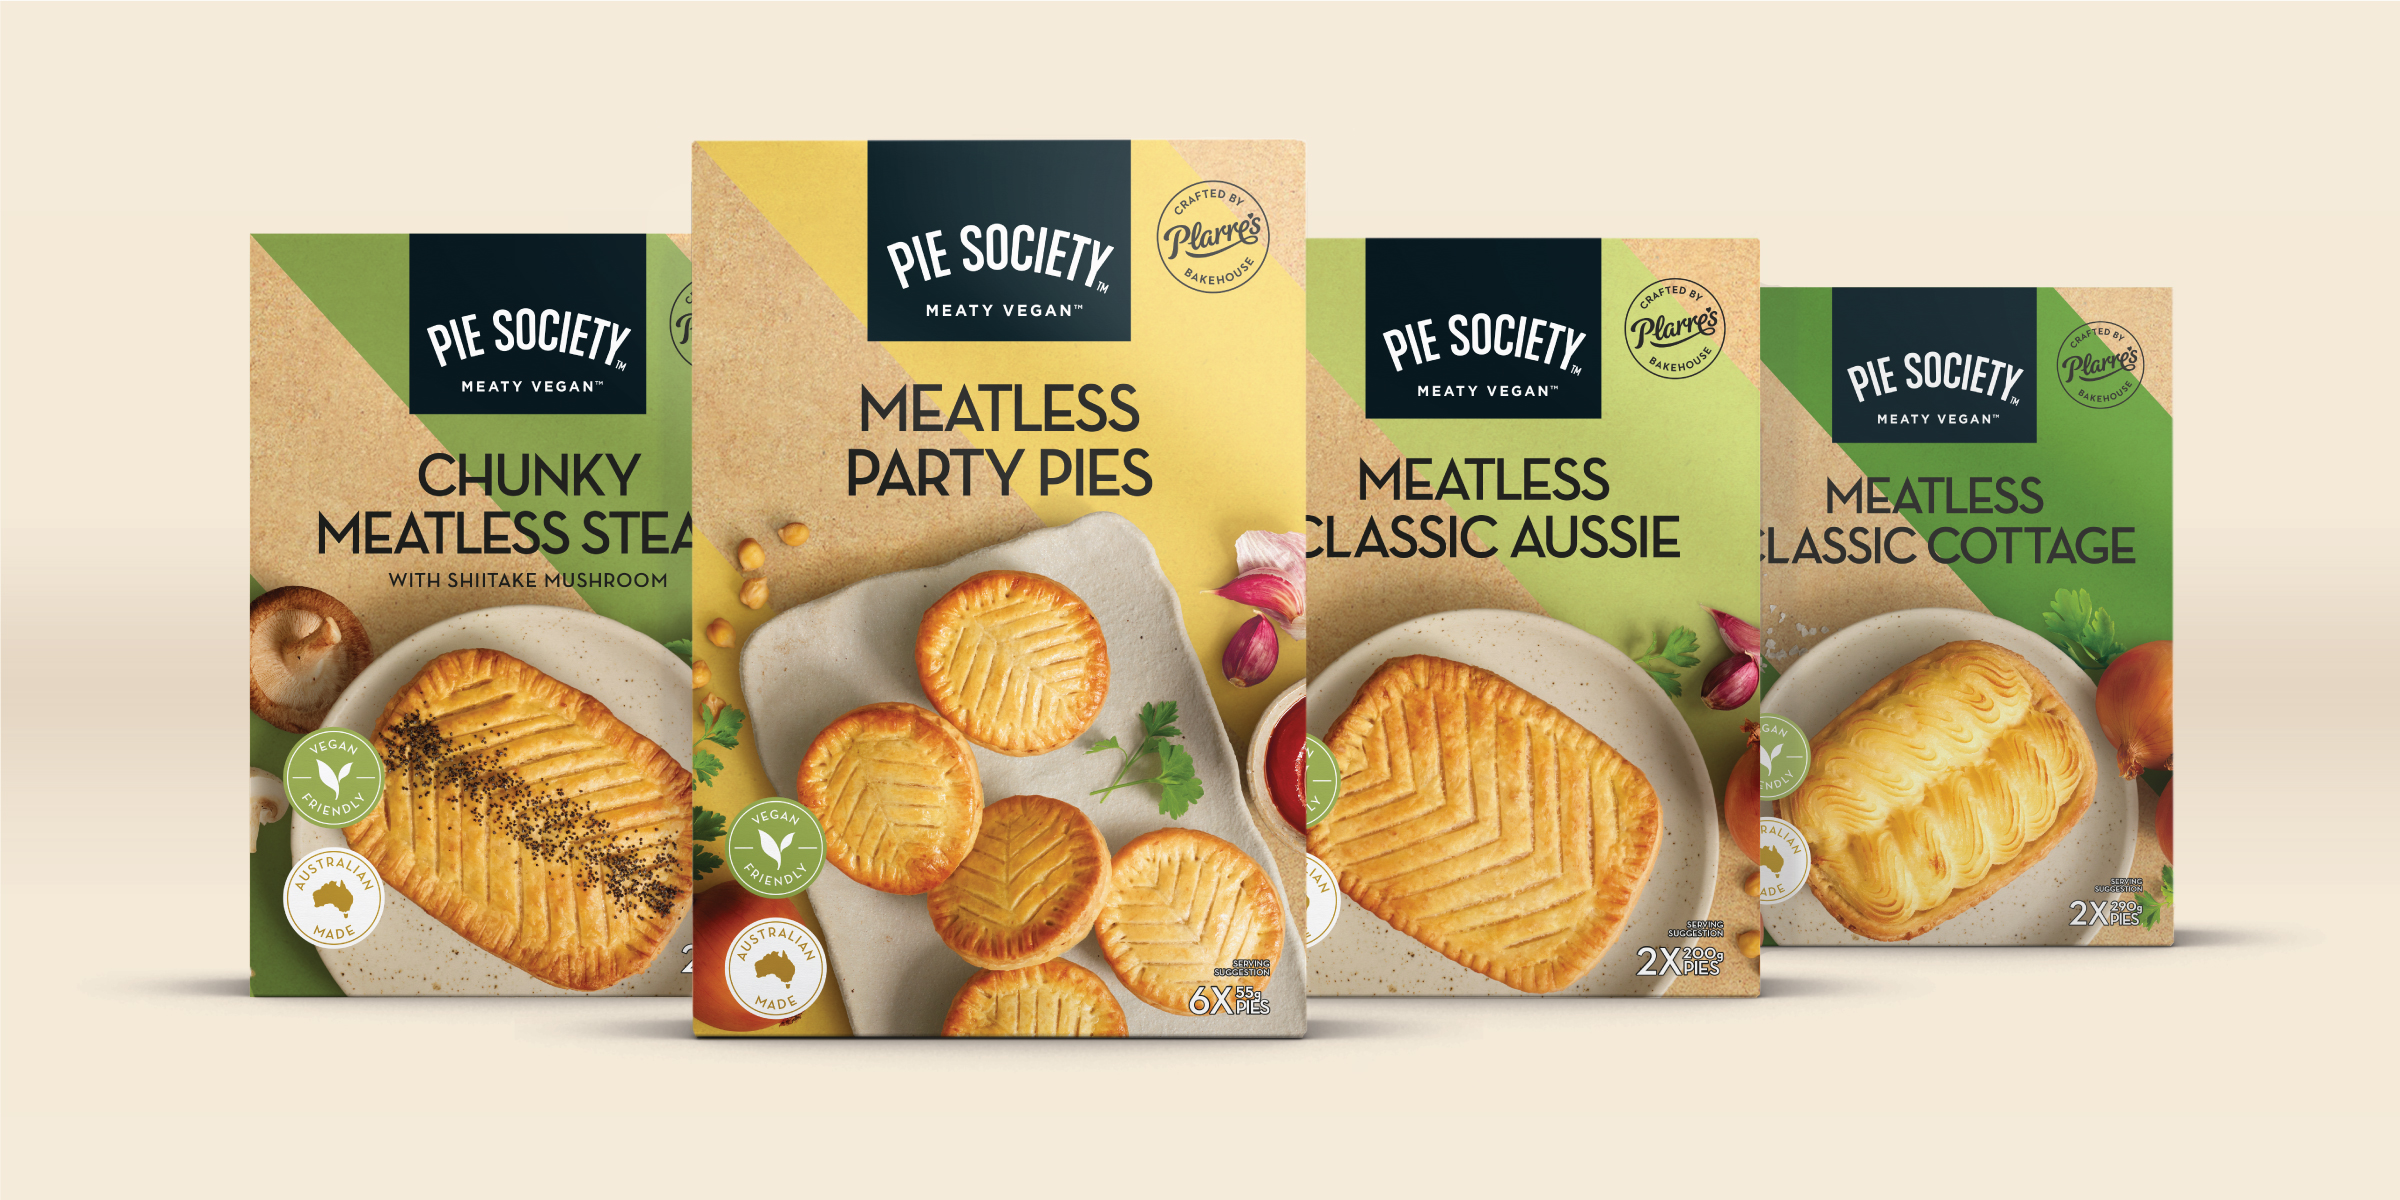 Ferguson Plarre’s Pie Society - Product packaging range